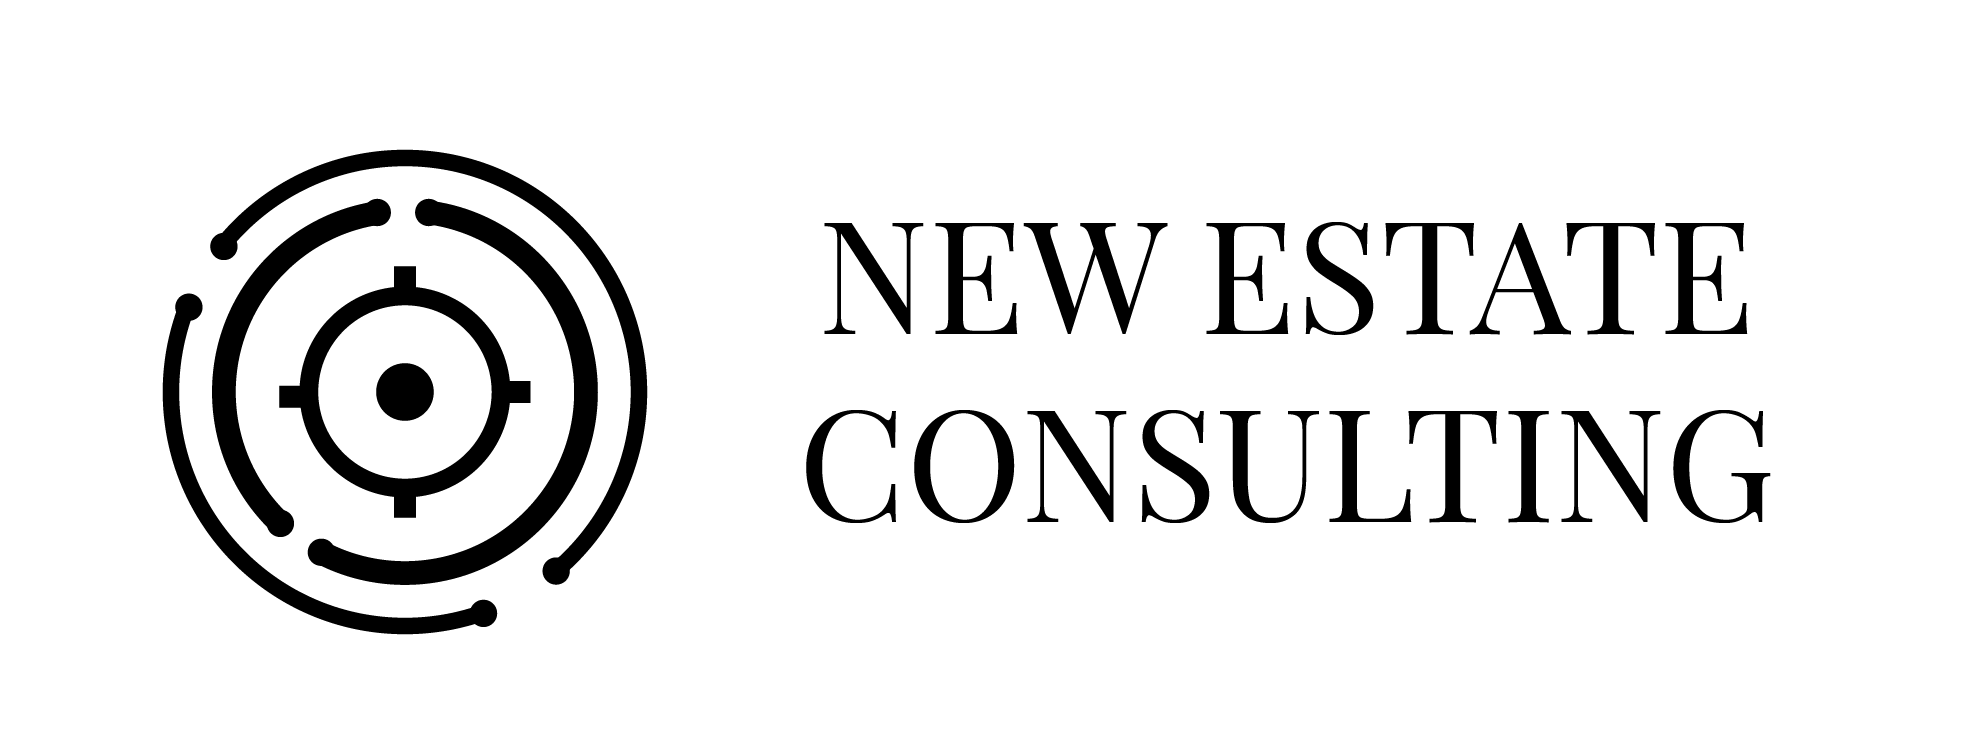 New Estate Consulting